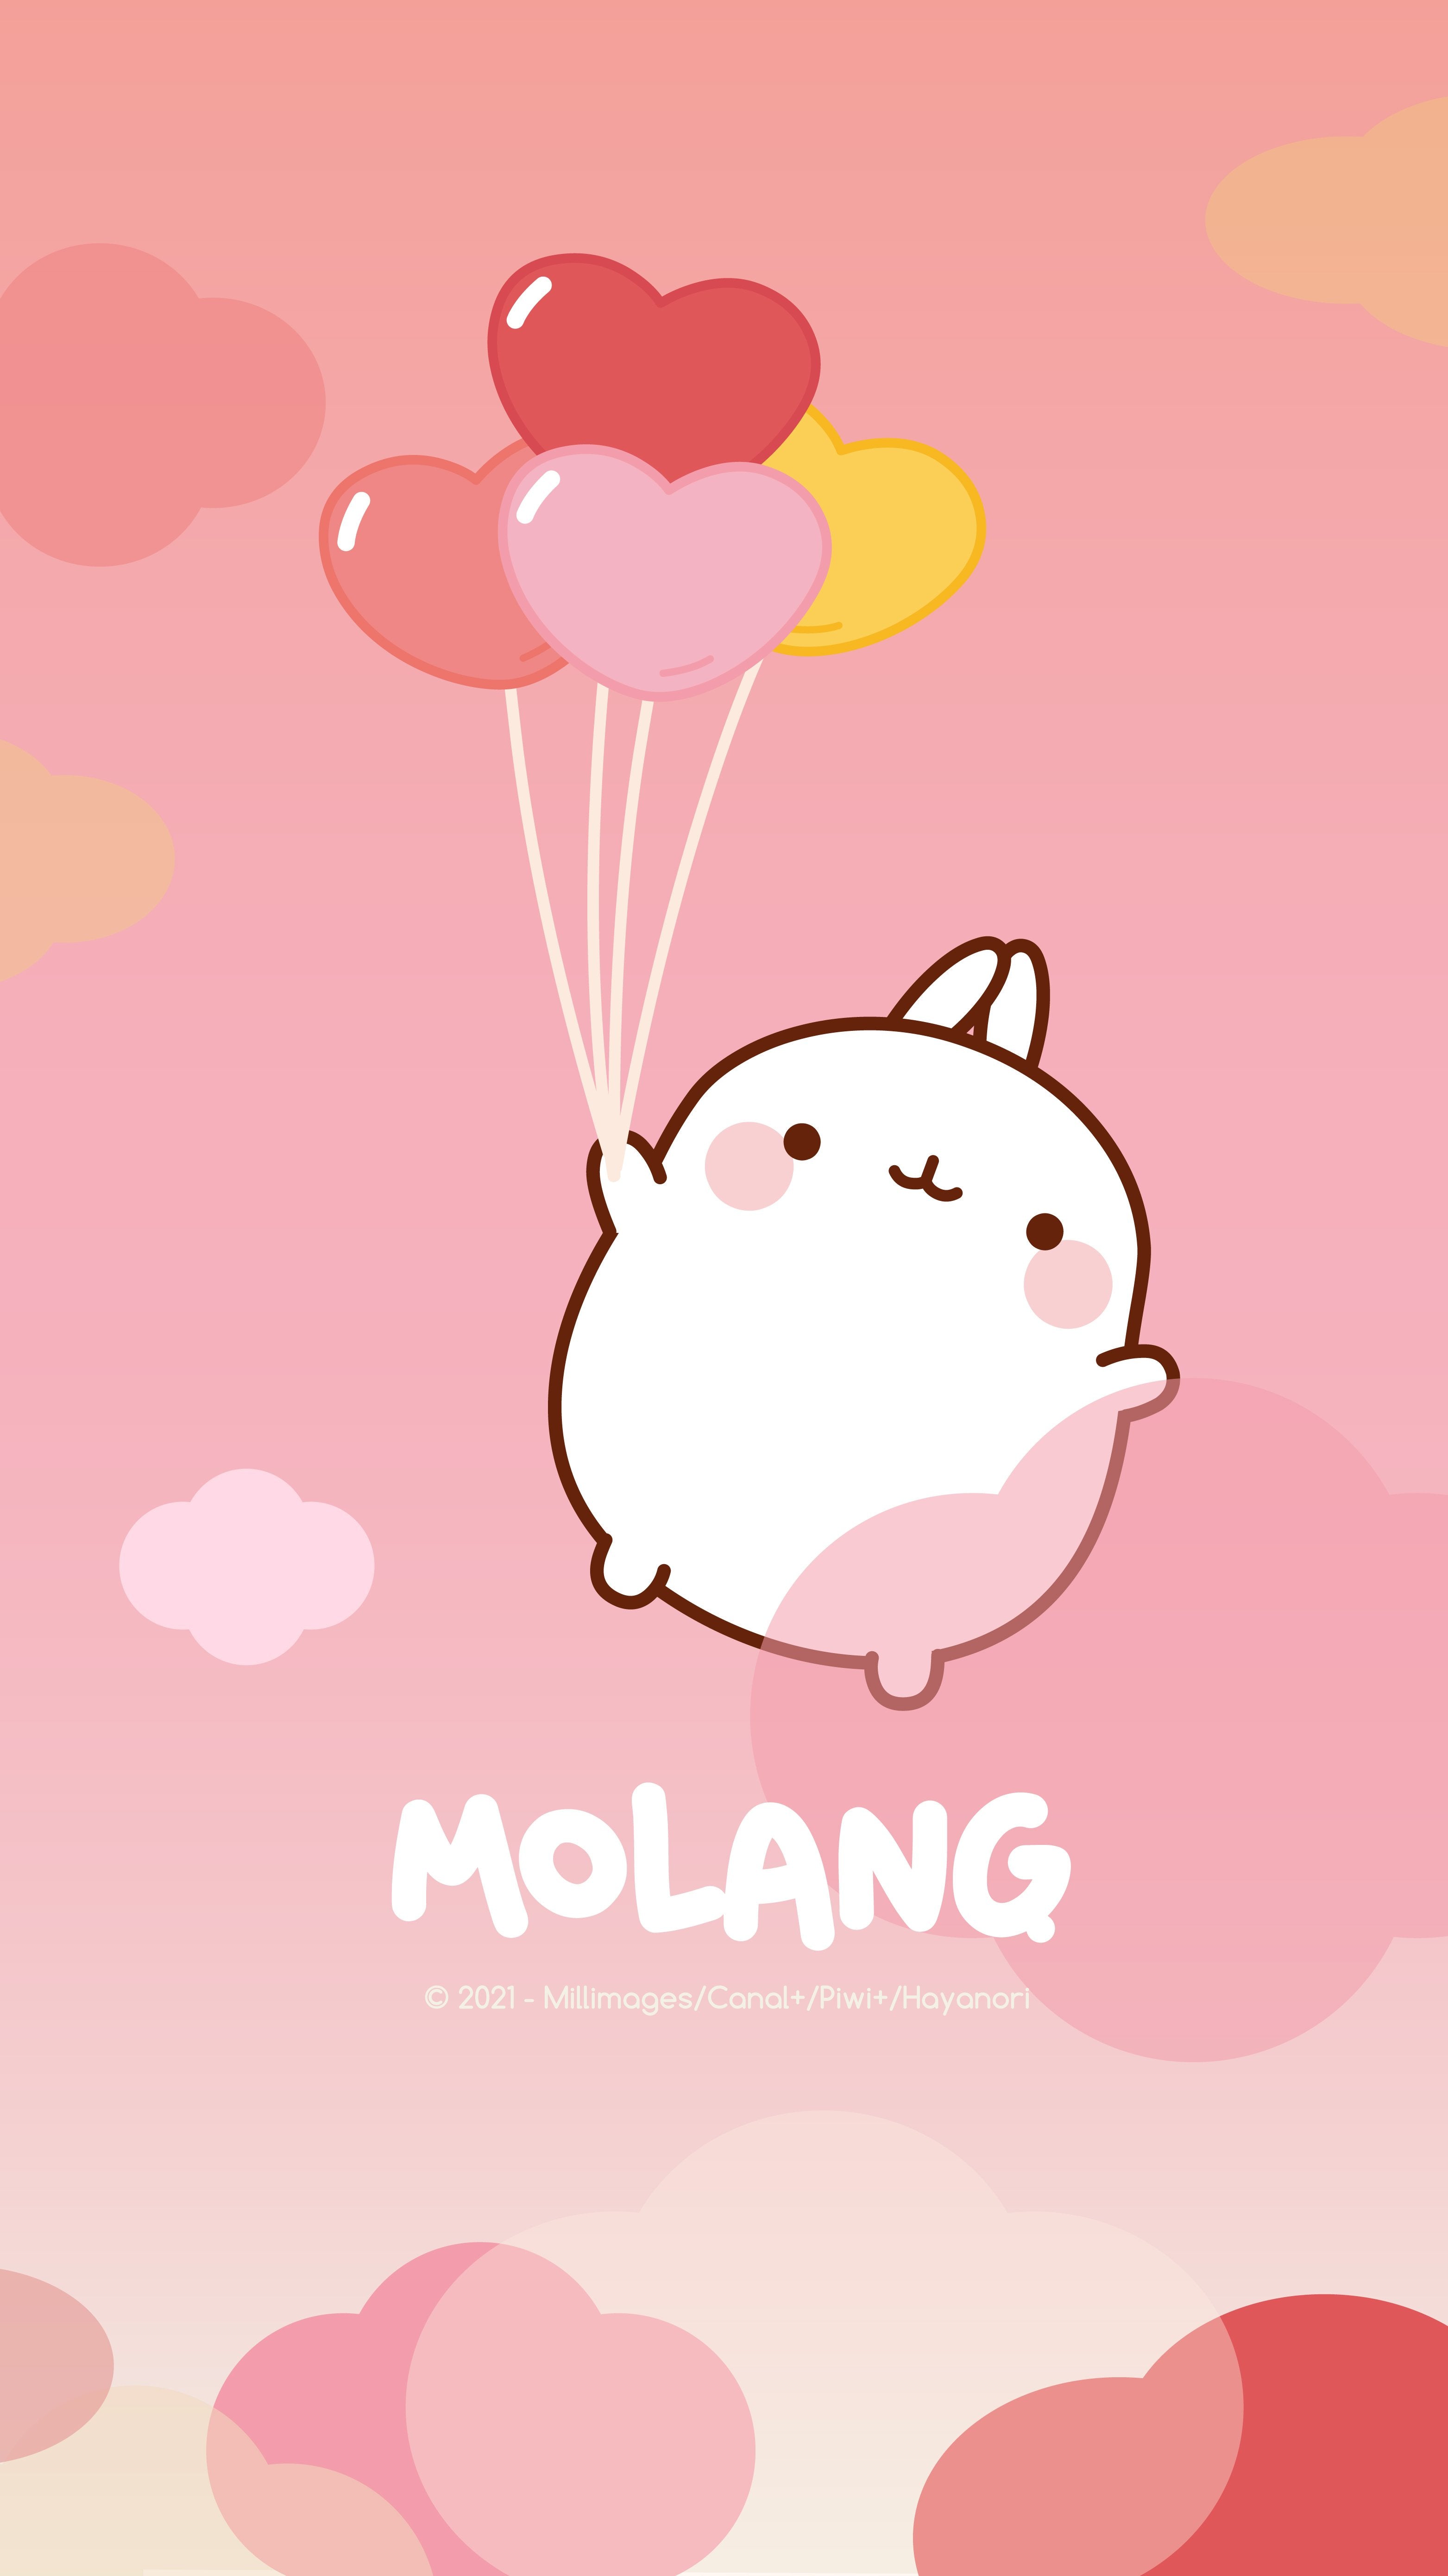 Molang and balloons on a pink sky - Molang